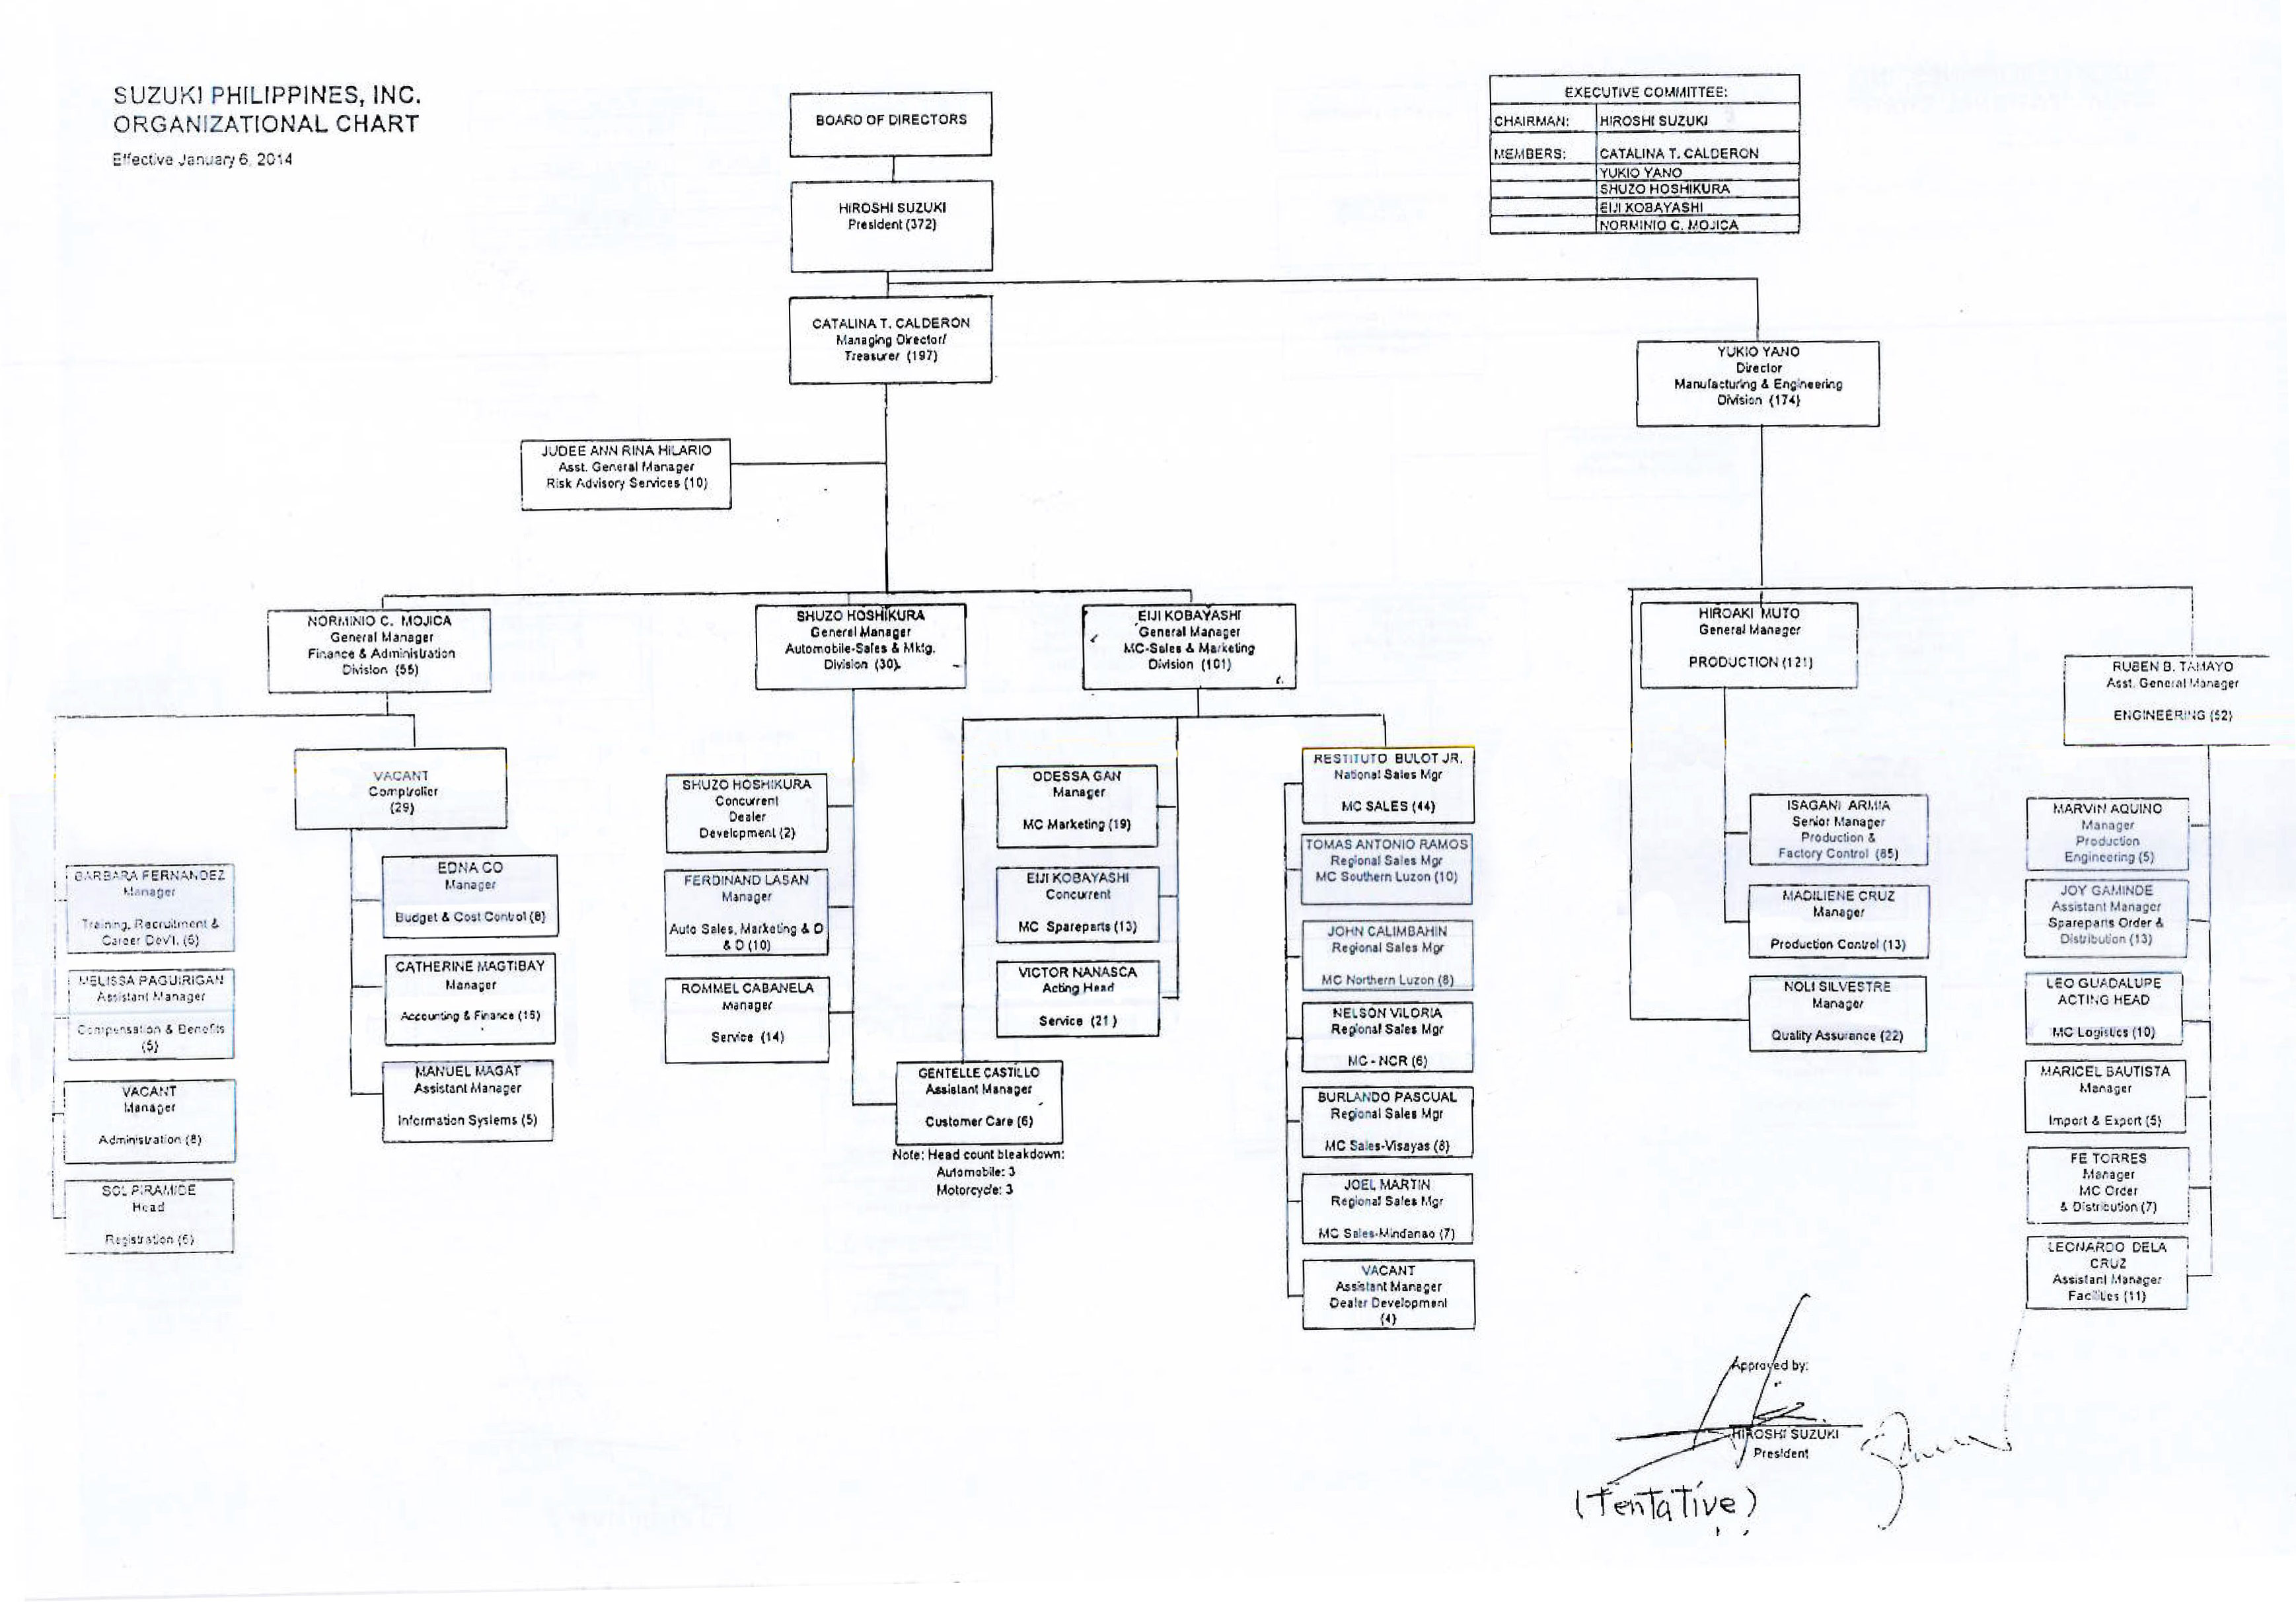 Honda organizational chart #3